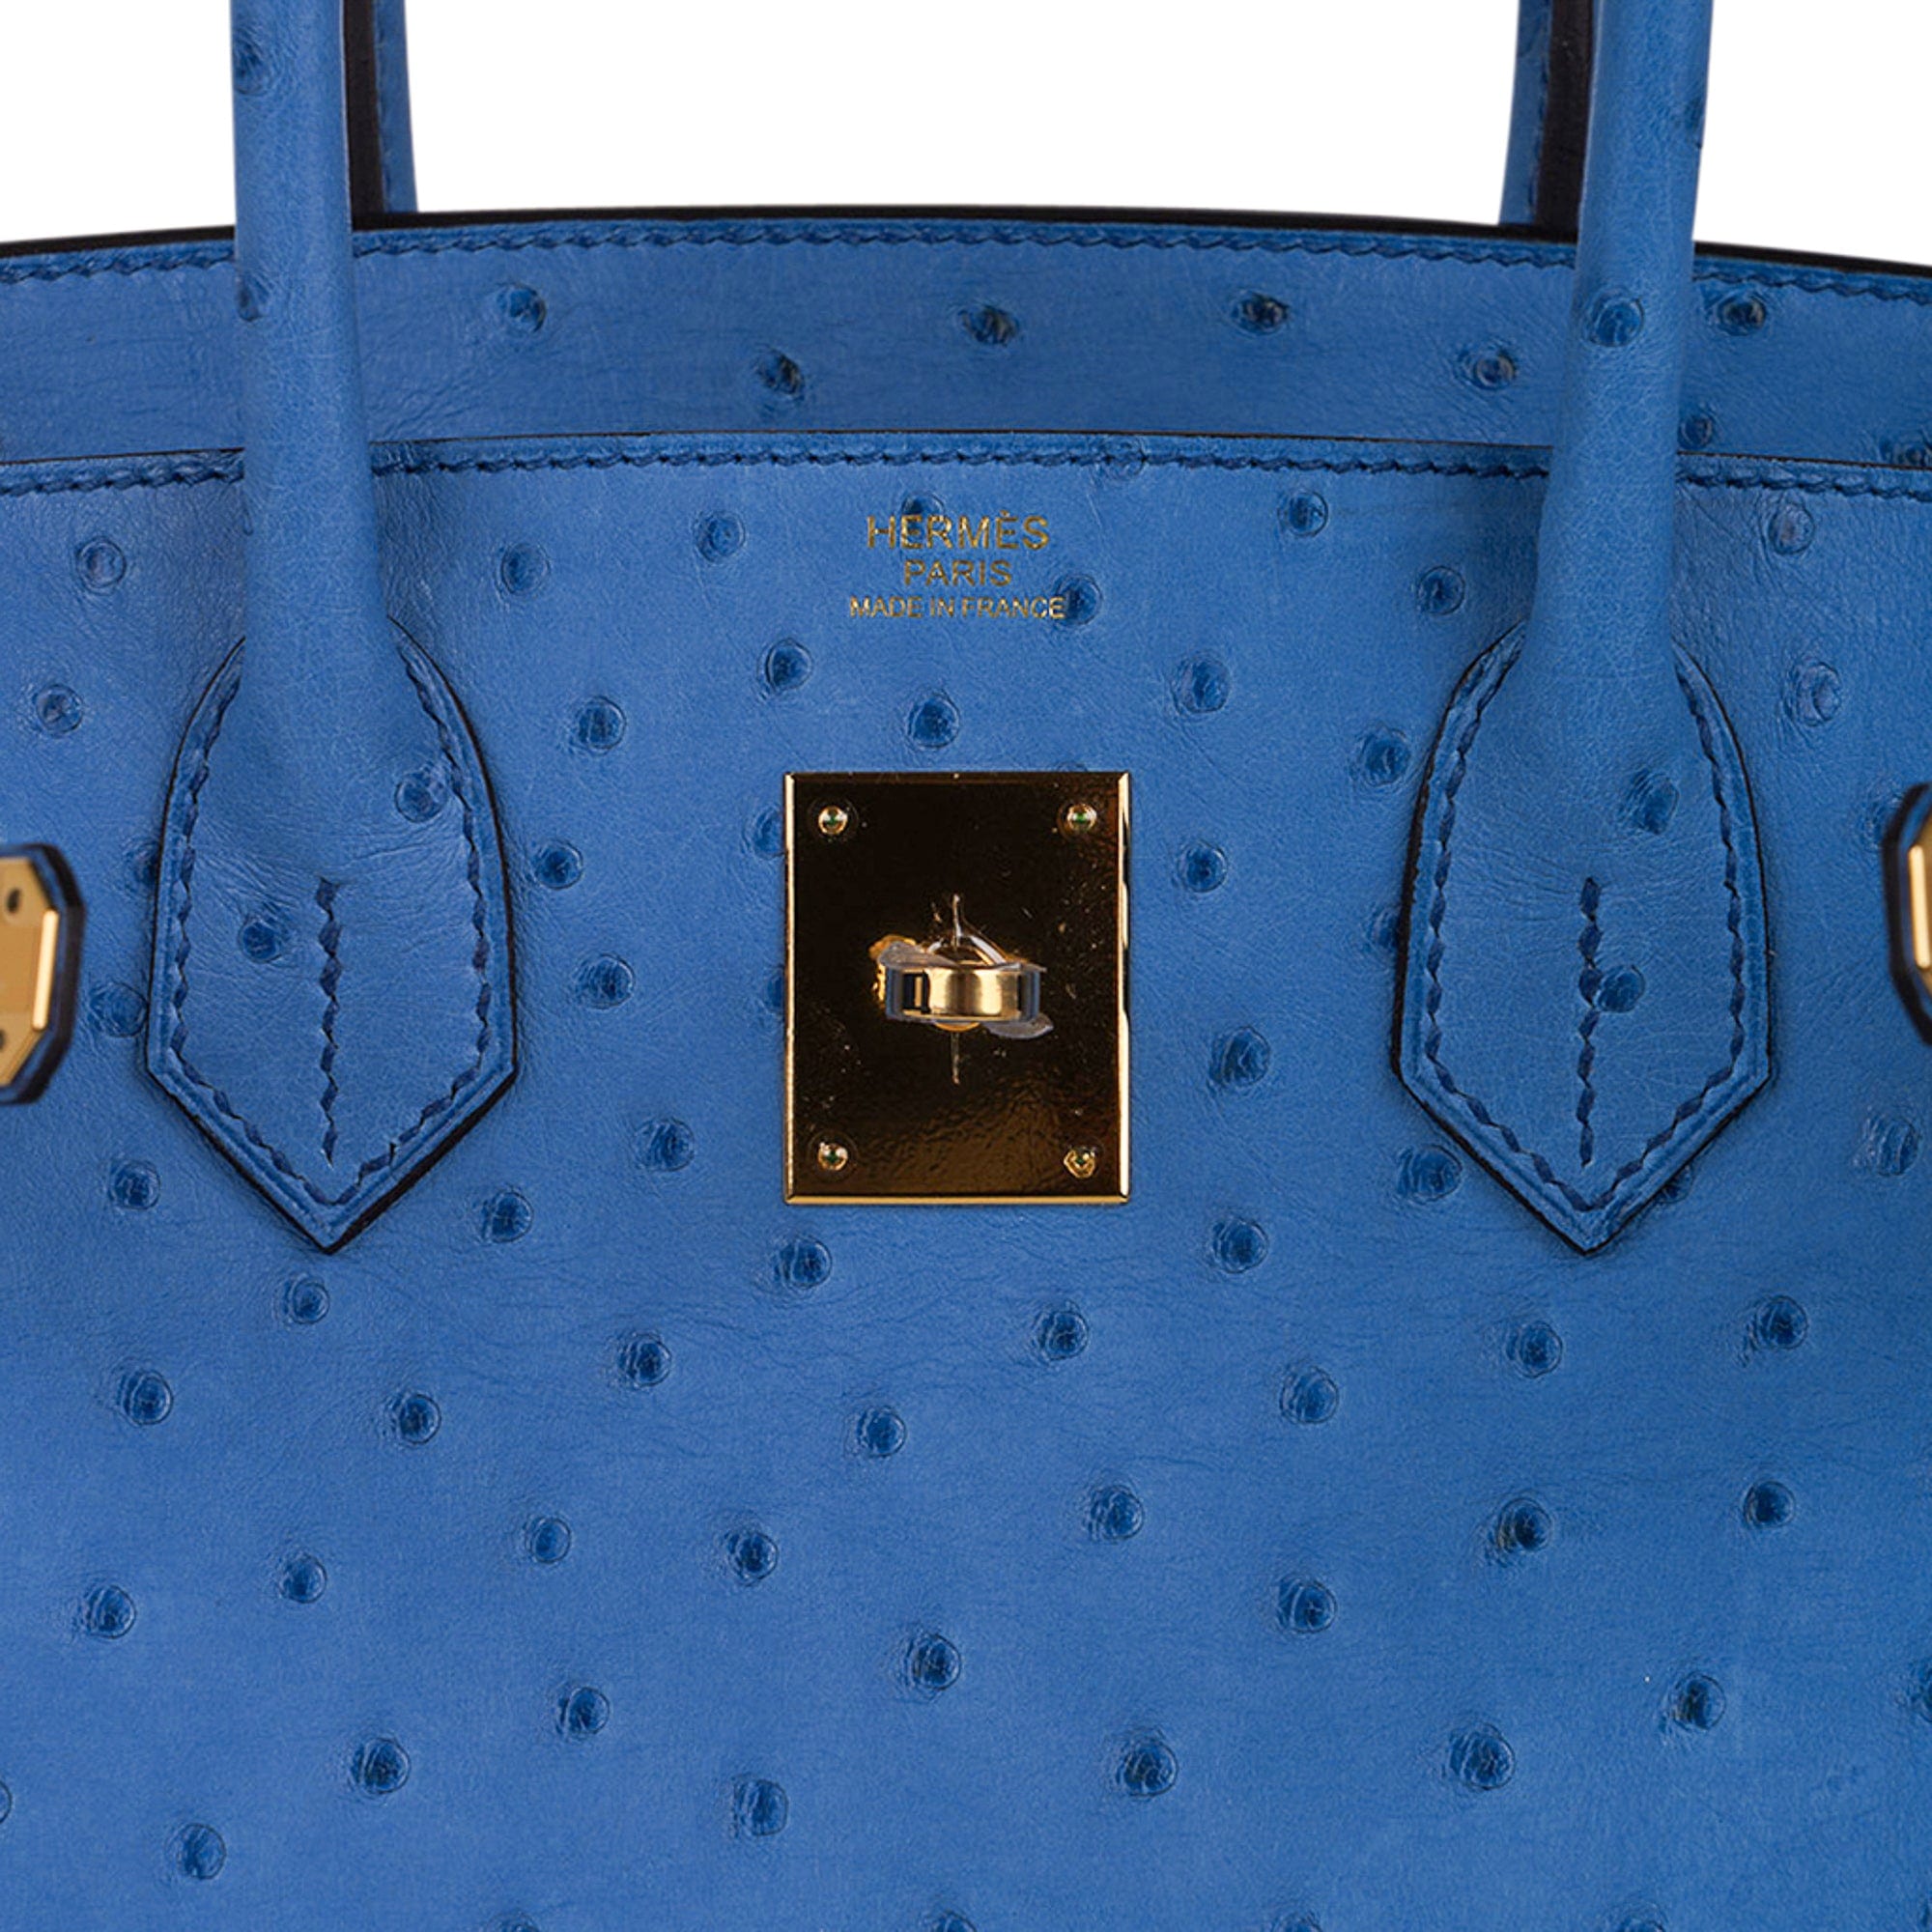 Hermes Birkin 30 Bag Bleu Mykonos Ostrich Leather with Gold